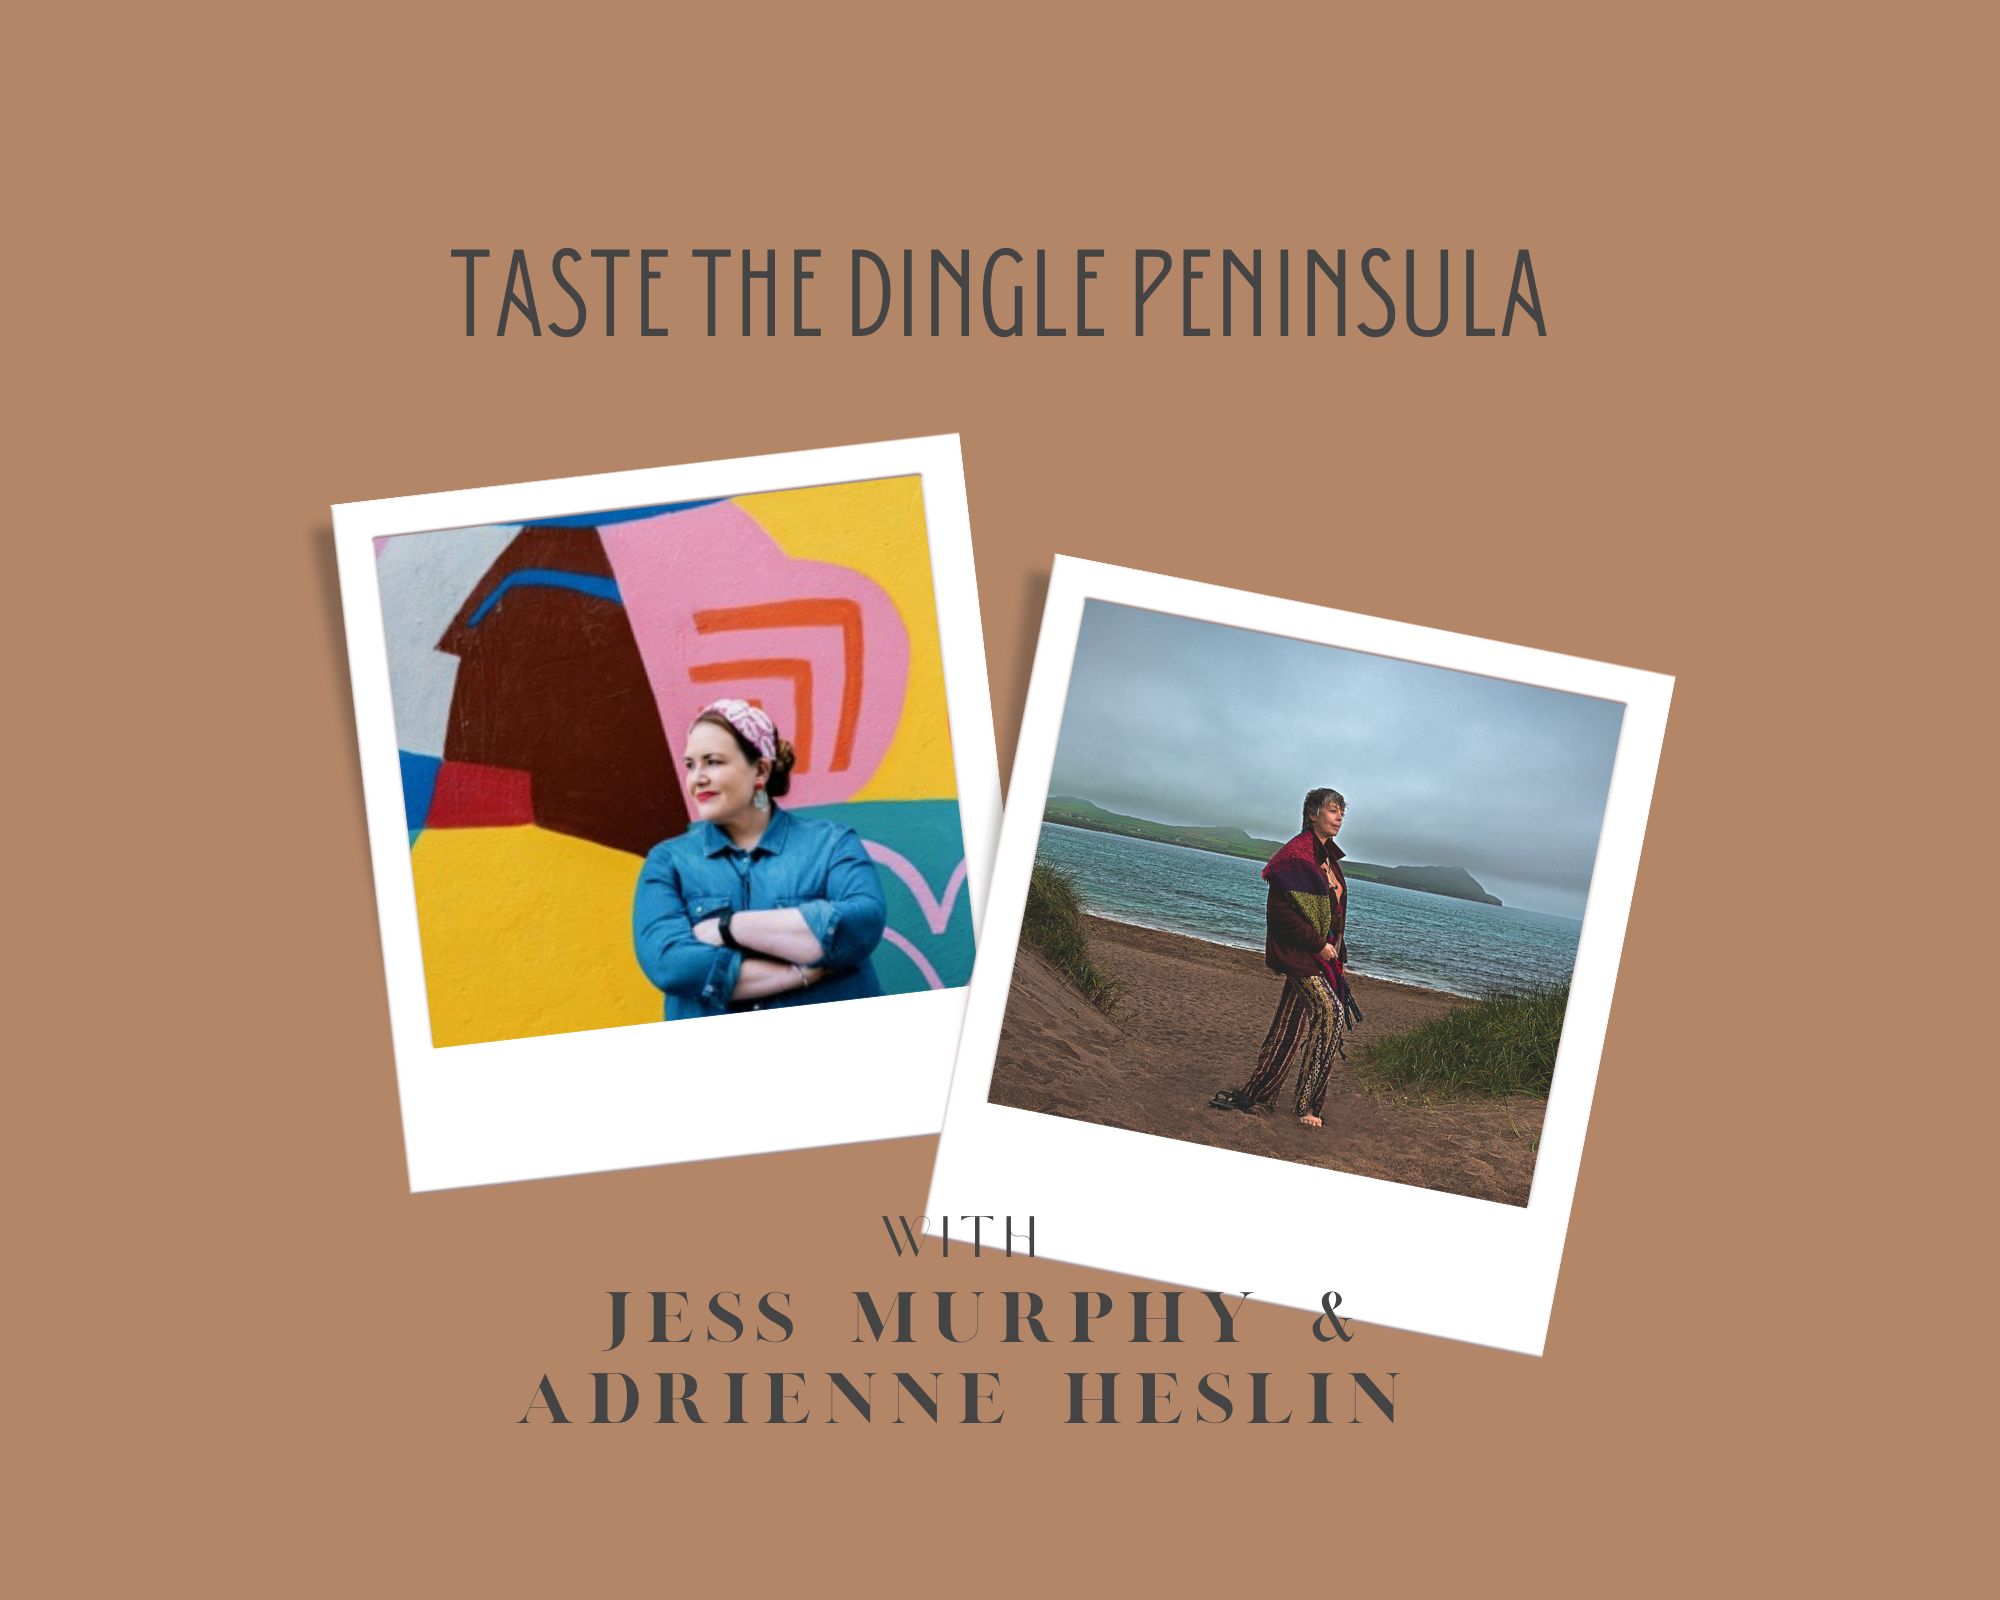 Taste the Dingle Peninsula